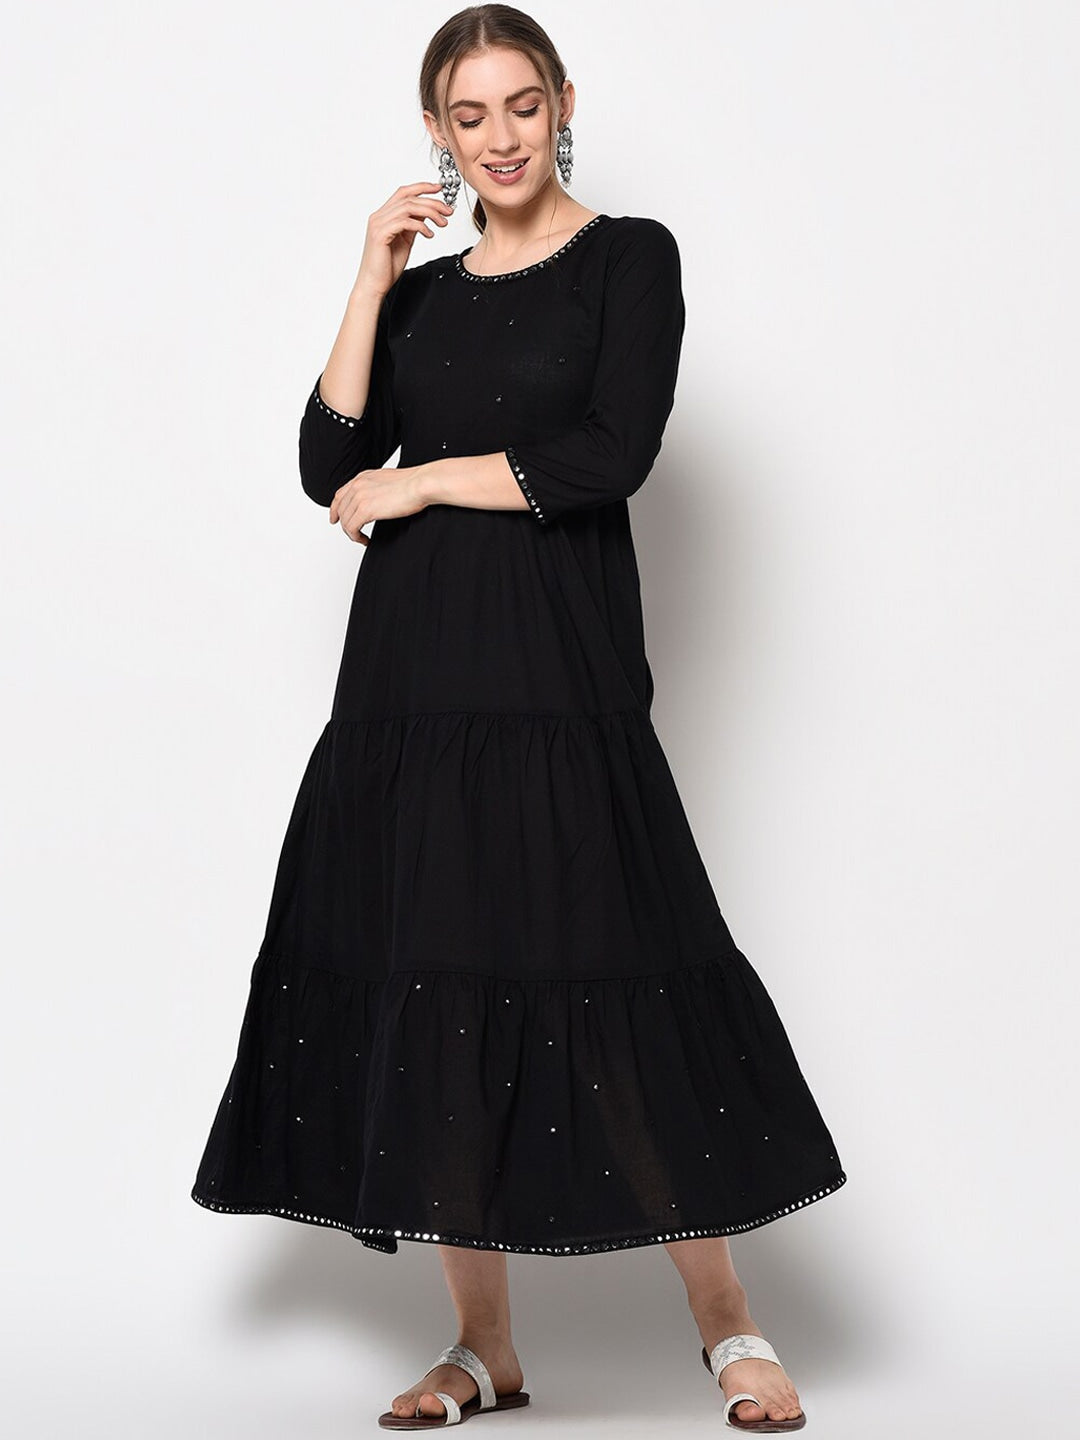 Black A-Line Dress-Yufta Store-7548KURBKS